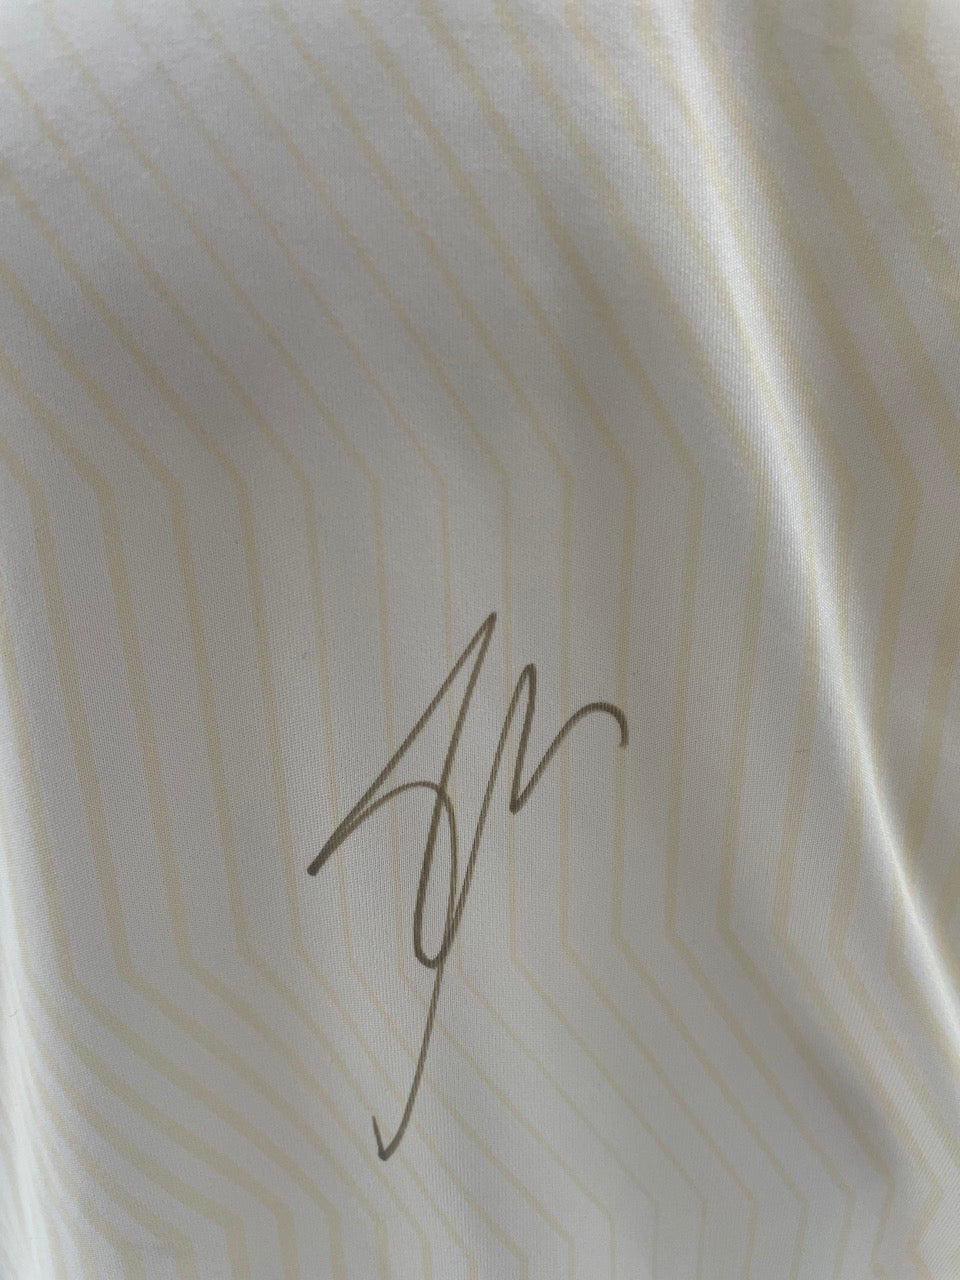 AC Mailand Trainingsshirt Malick Thiaw signiert Italien Autogramm Fußball COA L